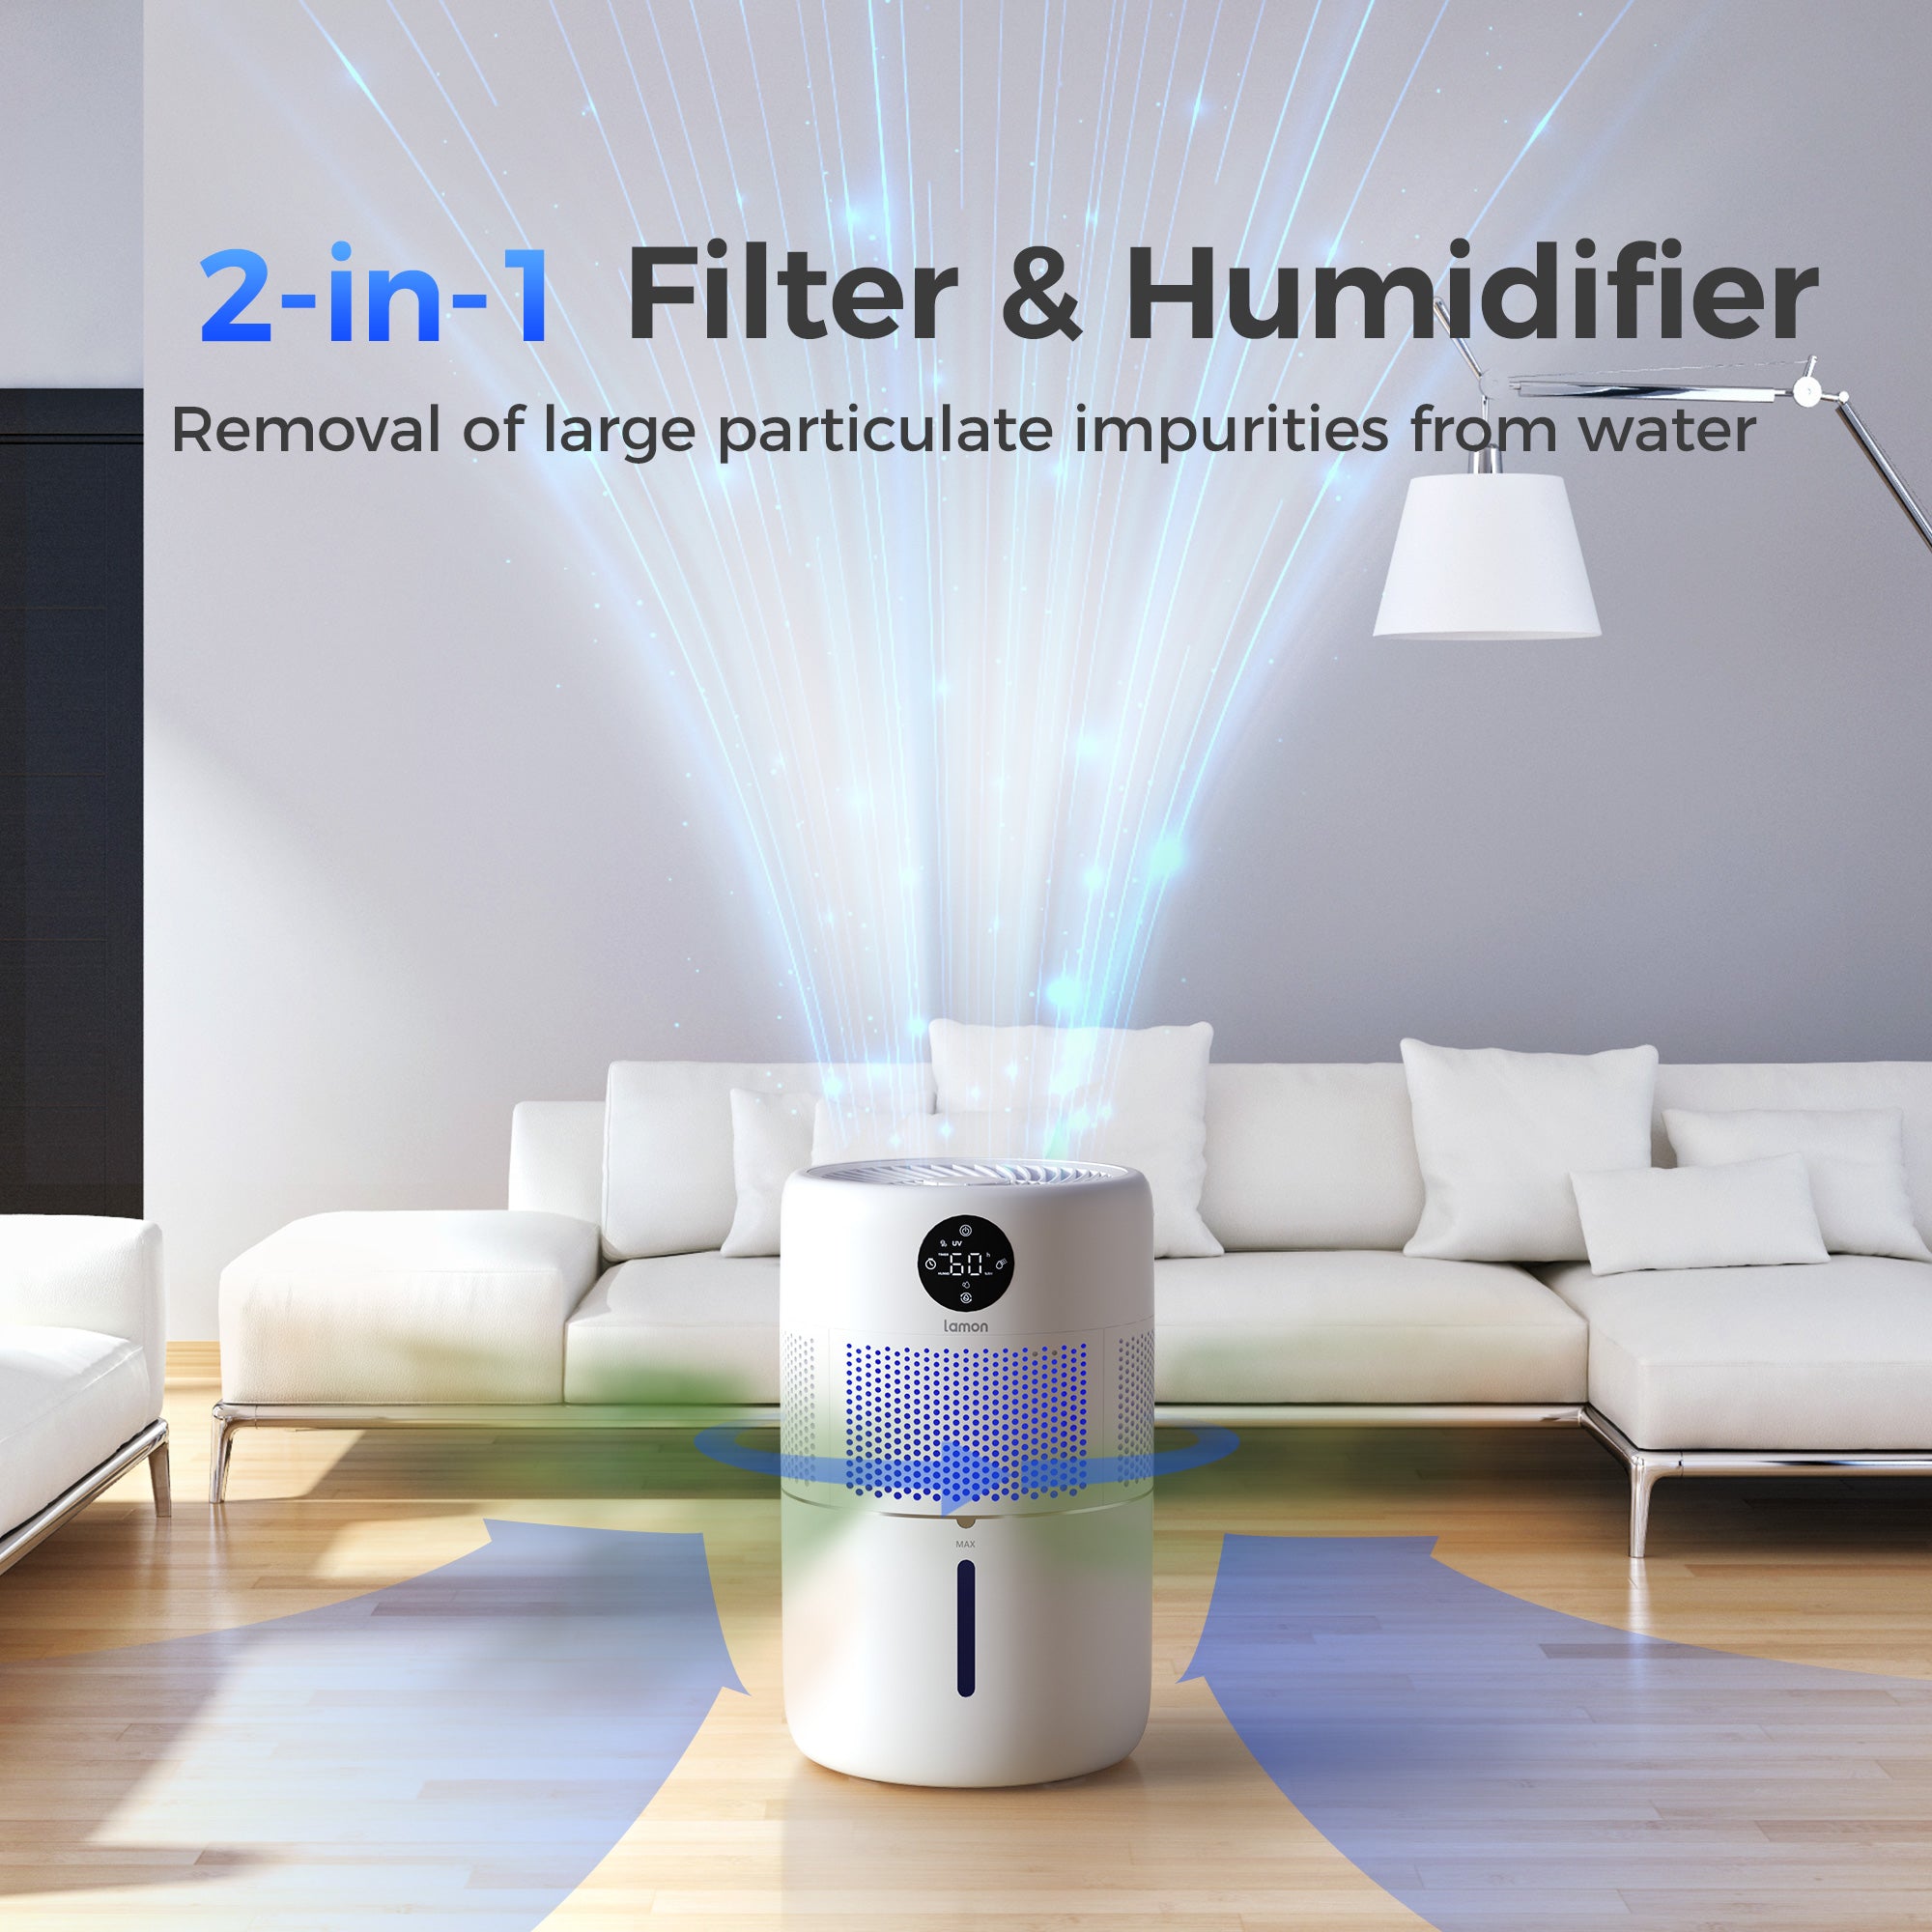 Lamon® MistZero S Evaporative Humidifier with 𝐔𝐕 & 𝐀𝐧𝐢𝐨𝐧 & Ag+，4.5L,400ml/H